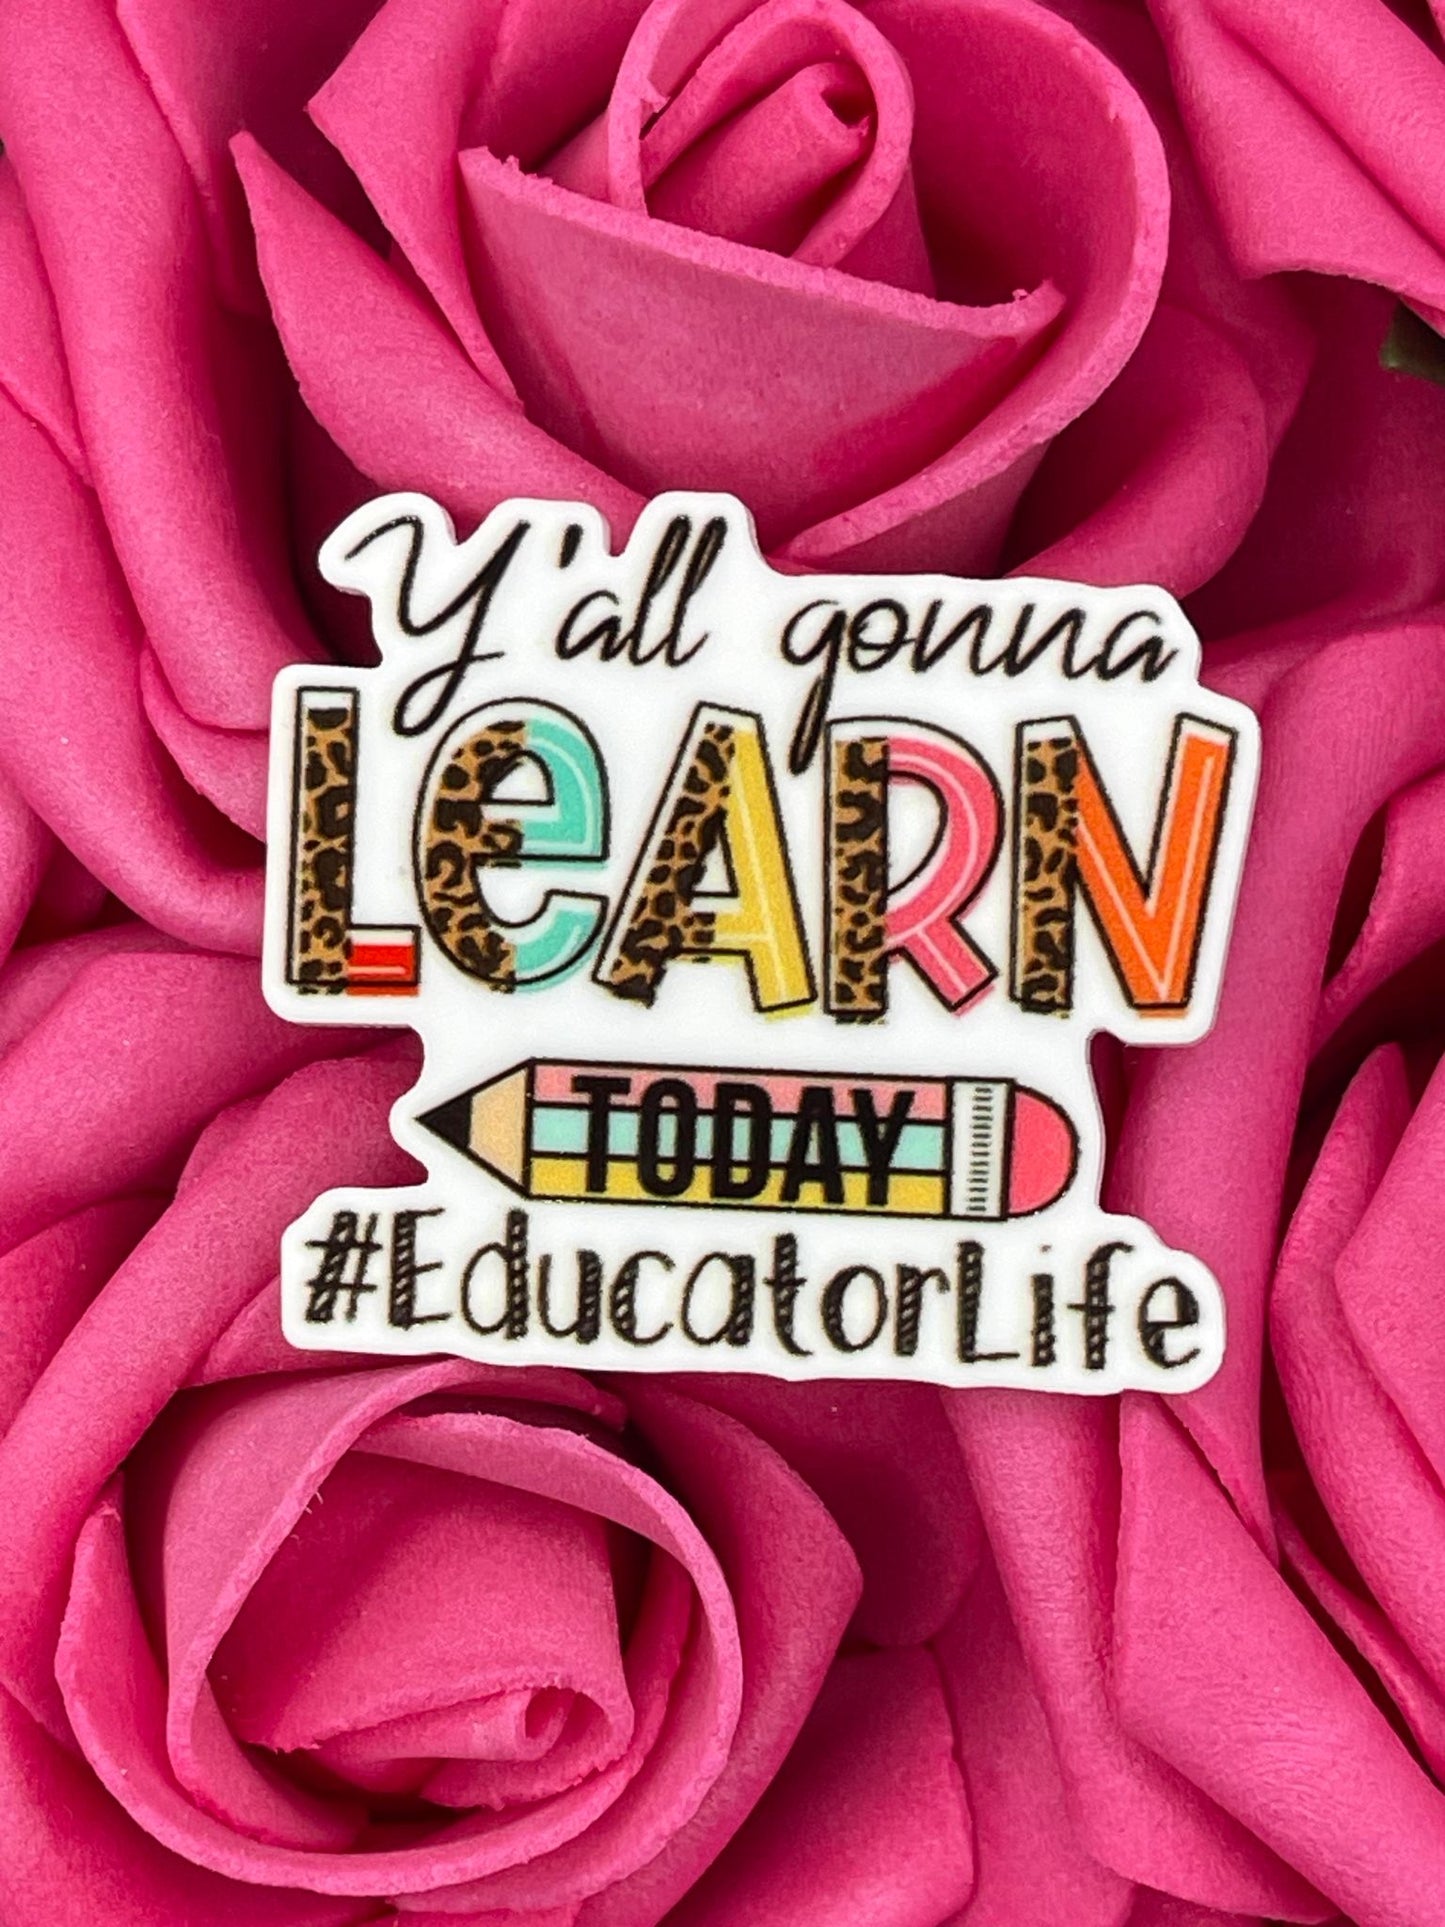 #1453 Yall guna learn today #EducatorLife